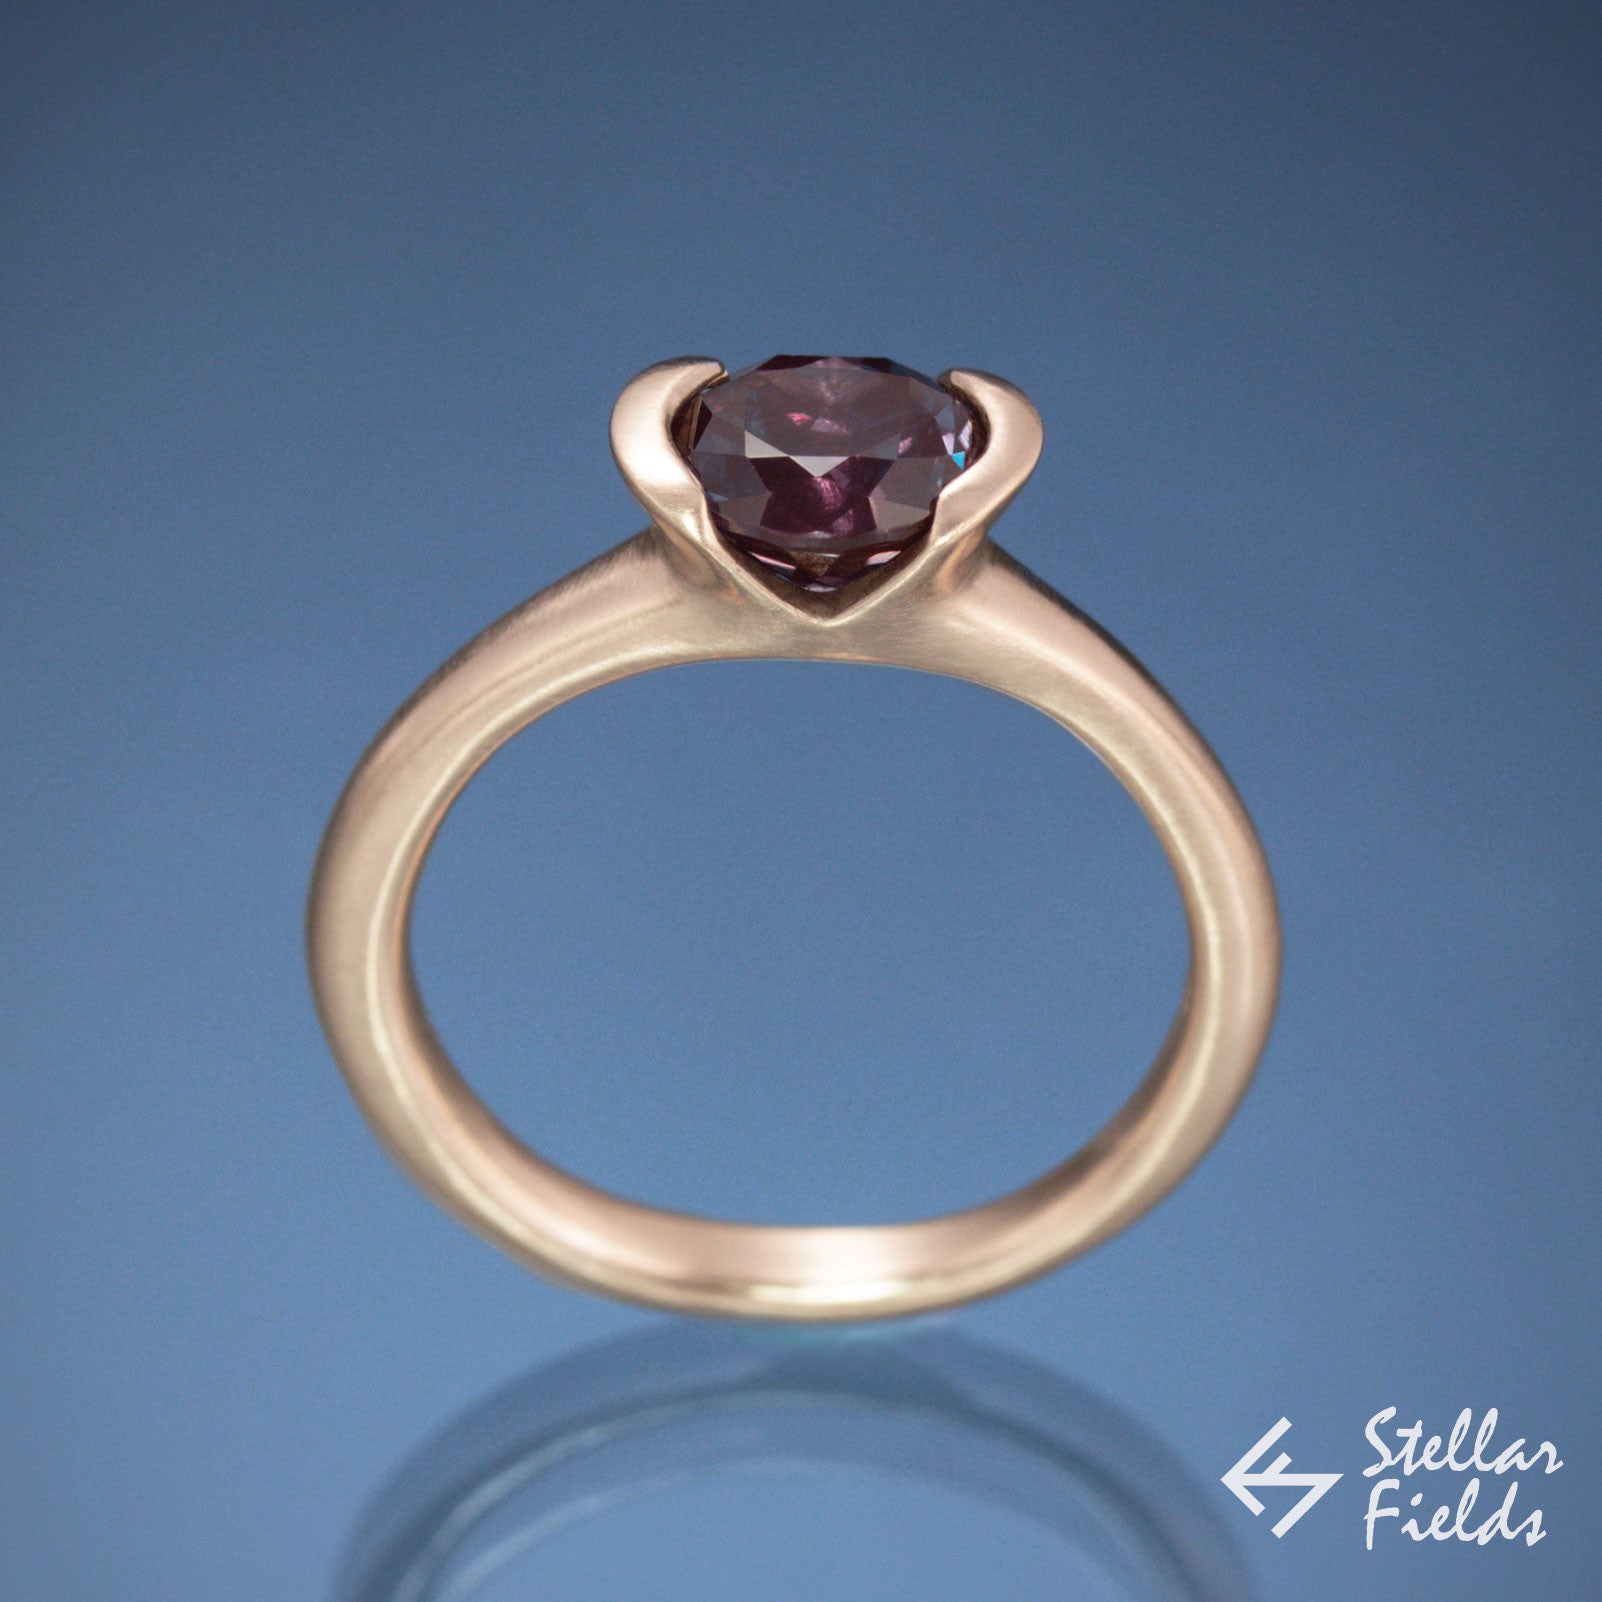 Alexandrite Semi Bezel Engagement Ring Modern Minimal Rose Gold Stellar Fields